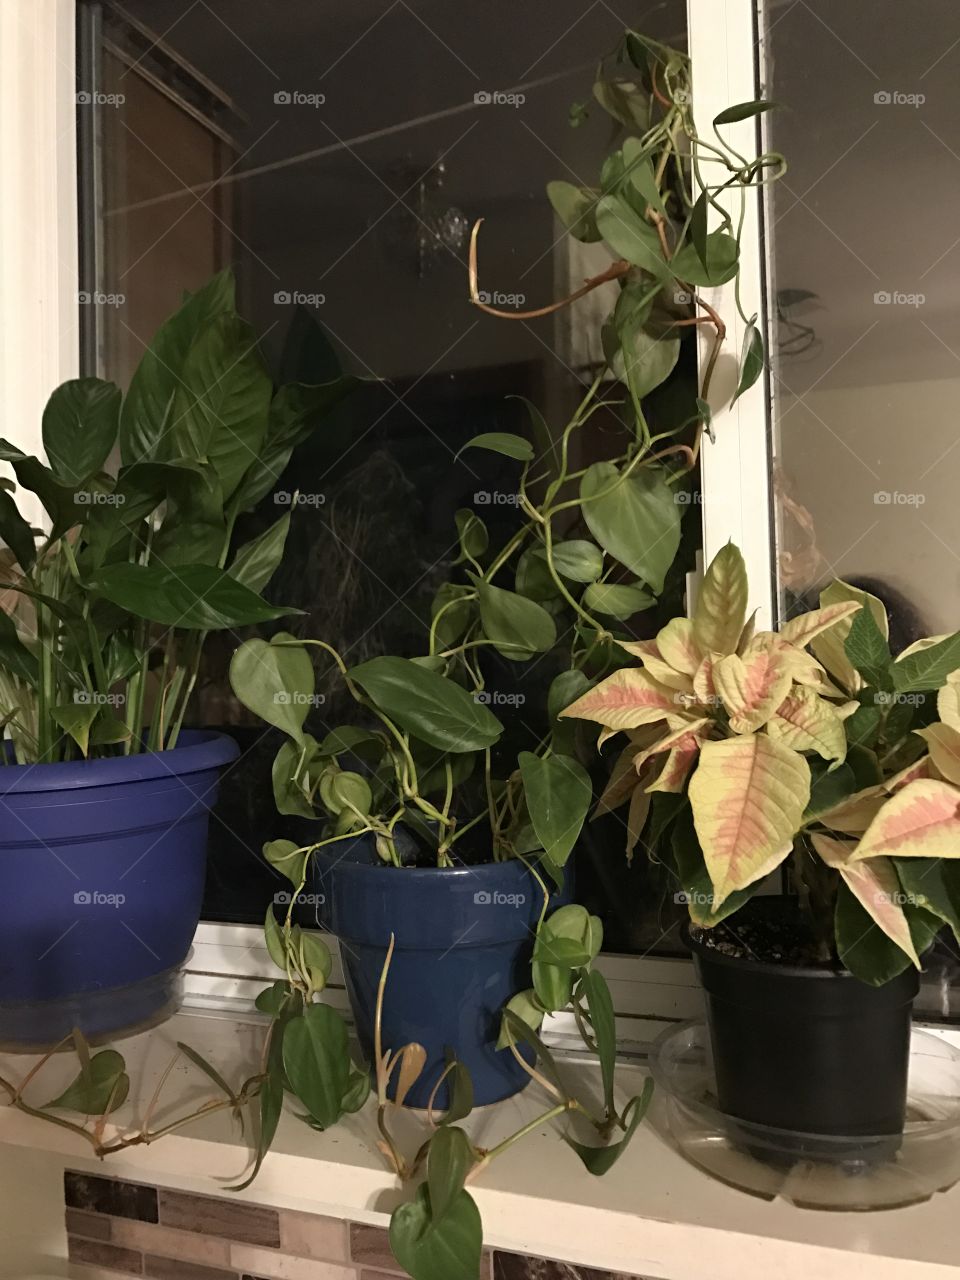 Indoors plants before sunrise